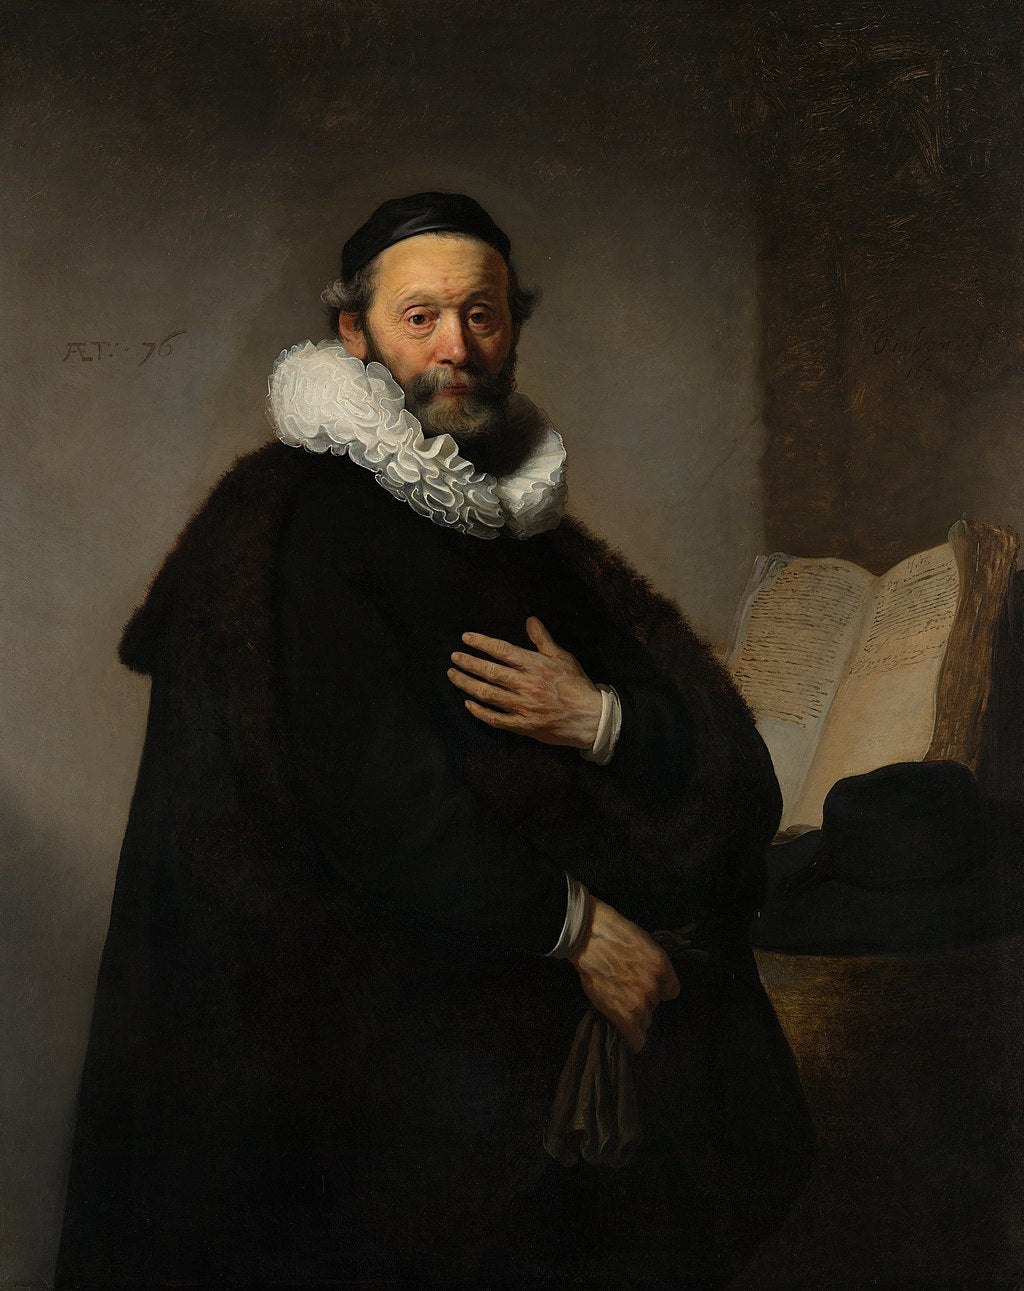 Portrait of Johannes Wtenbogaert Painting by Rembrandt Oil on Canvas Reproduction